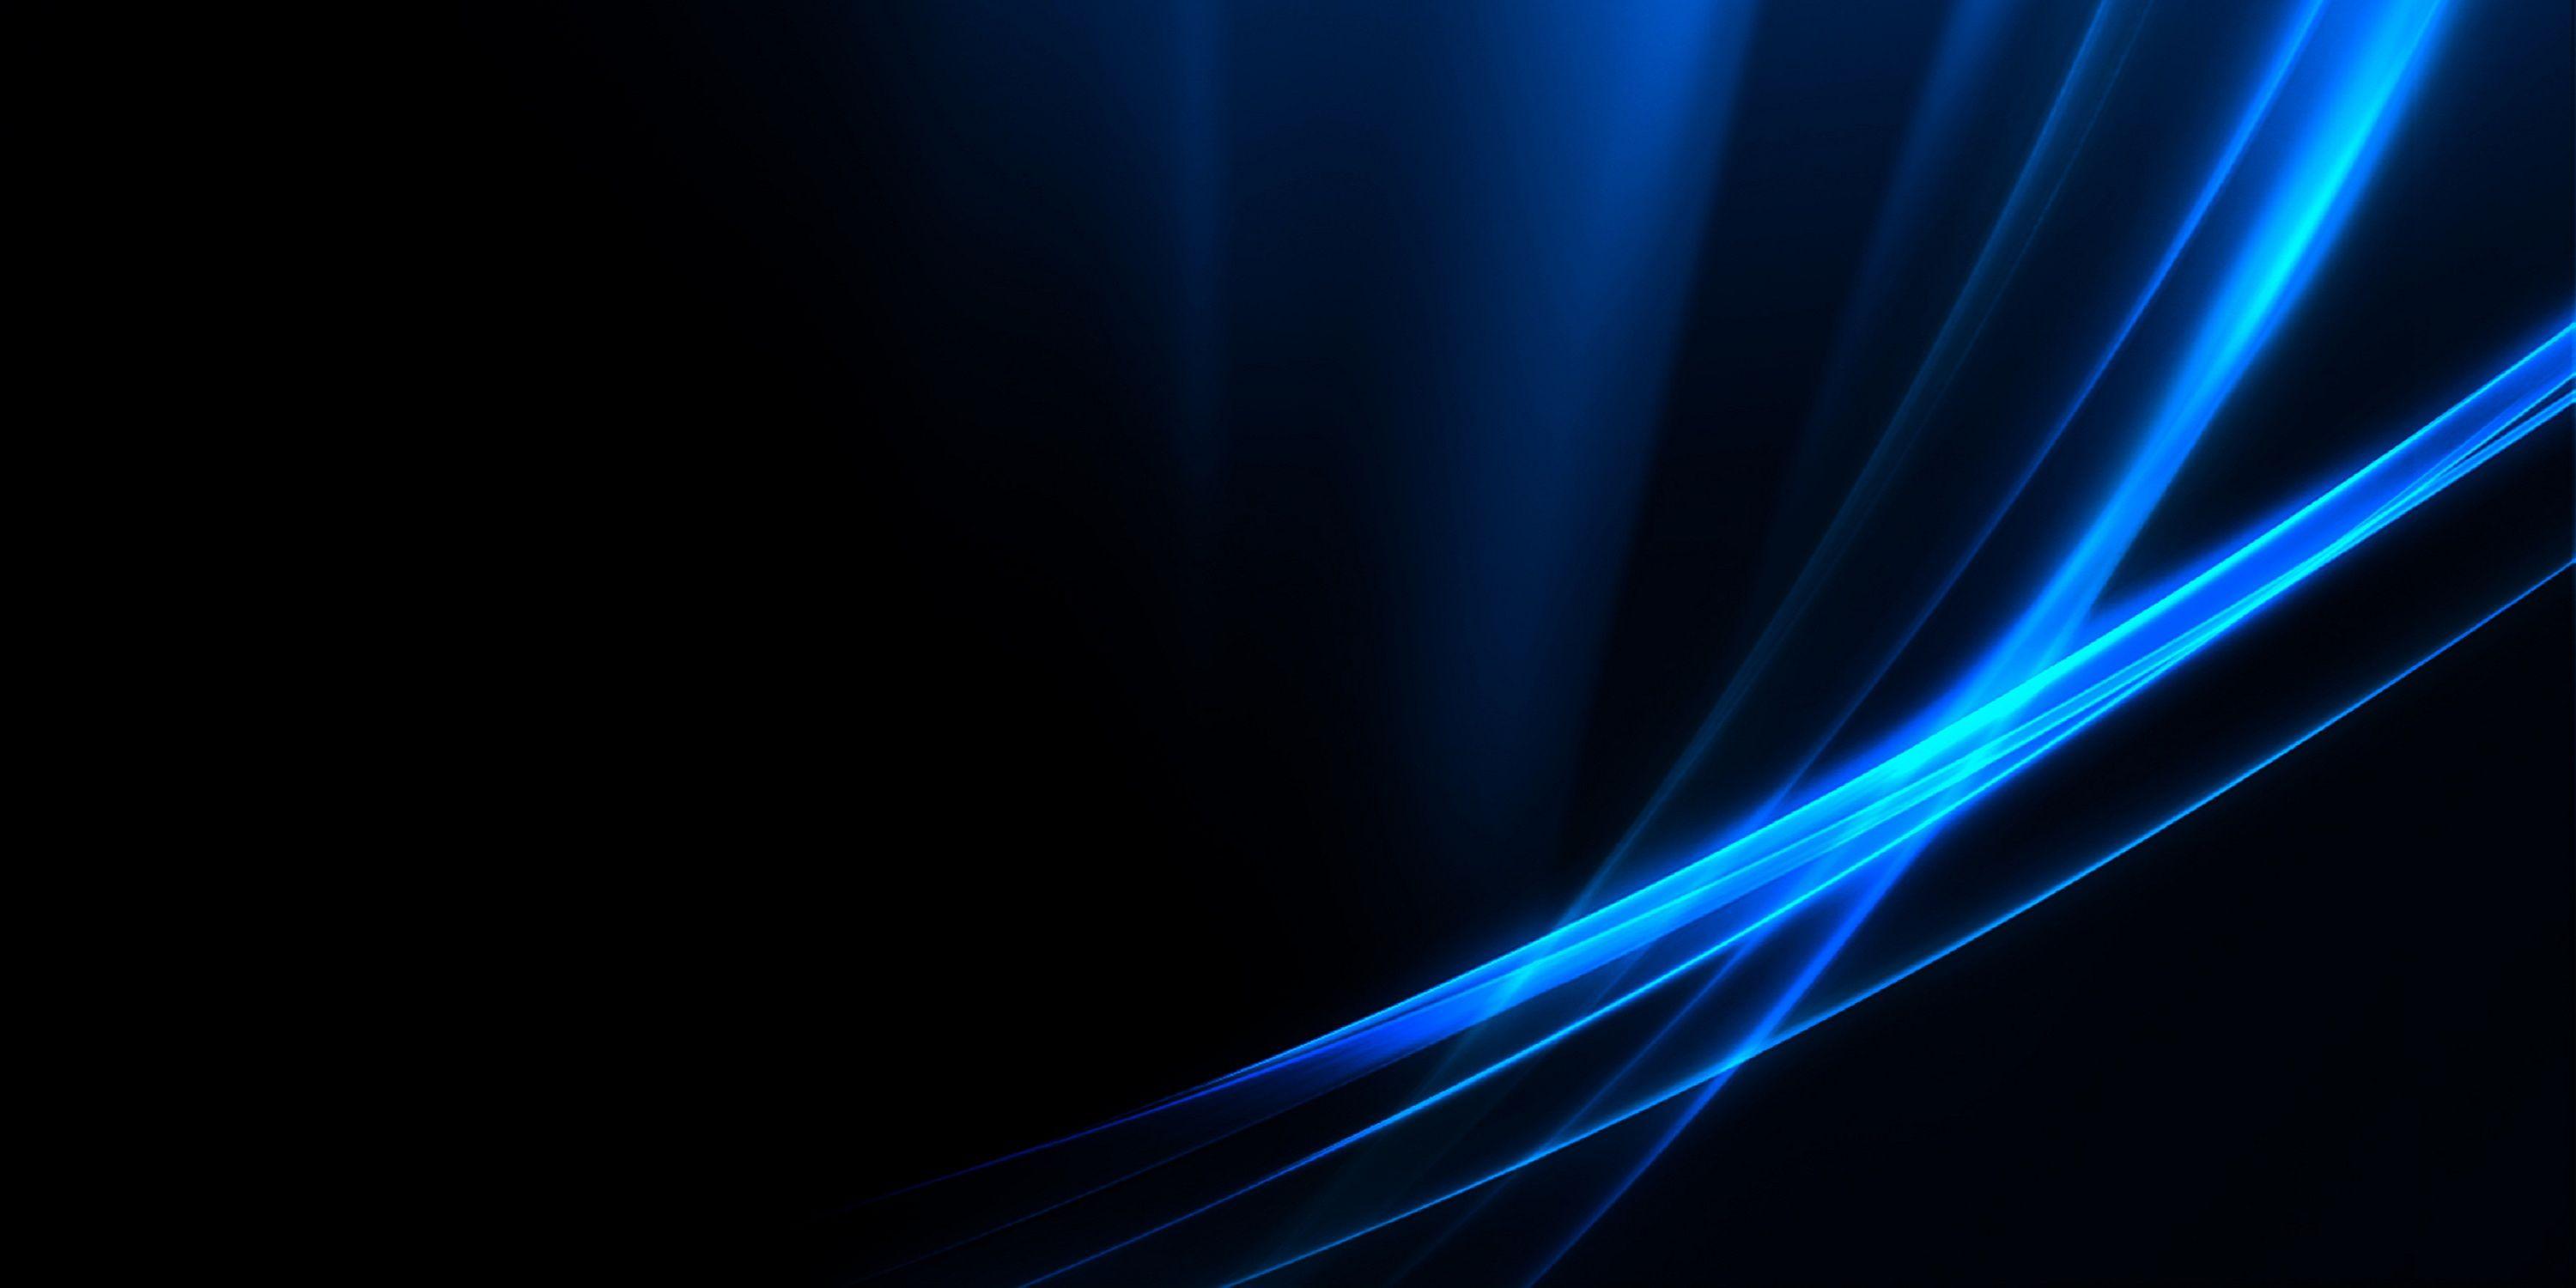 Windows 10 Black And Blue Wallpaper 4k Download Wallpaper 3840x2160 Images